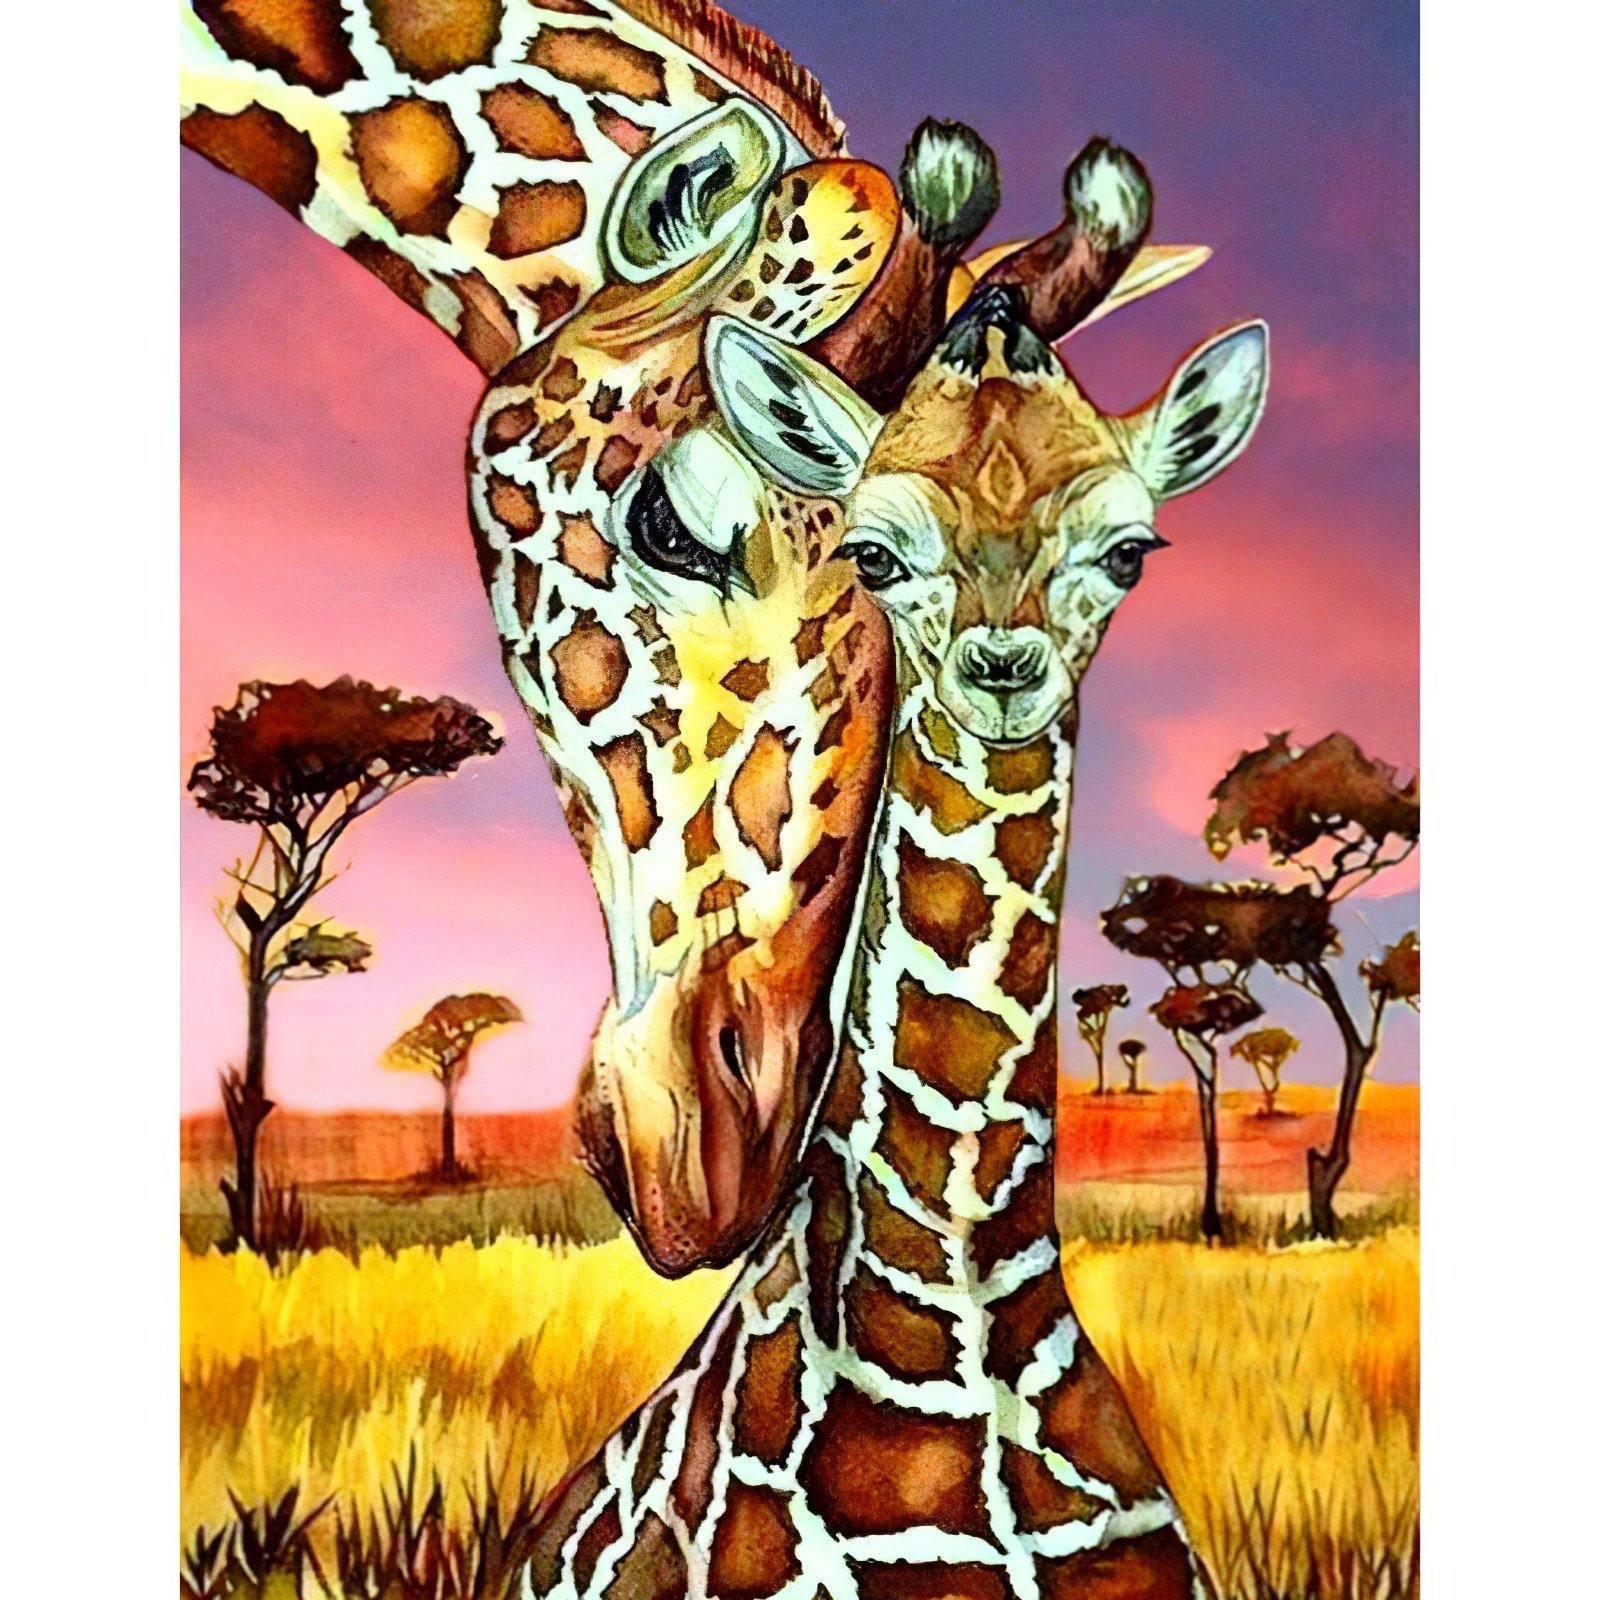 Stretch into the sky with elegant Giraffe artwork.Giraffe - Diamondartlove